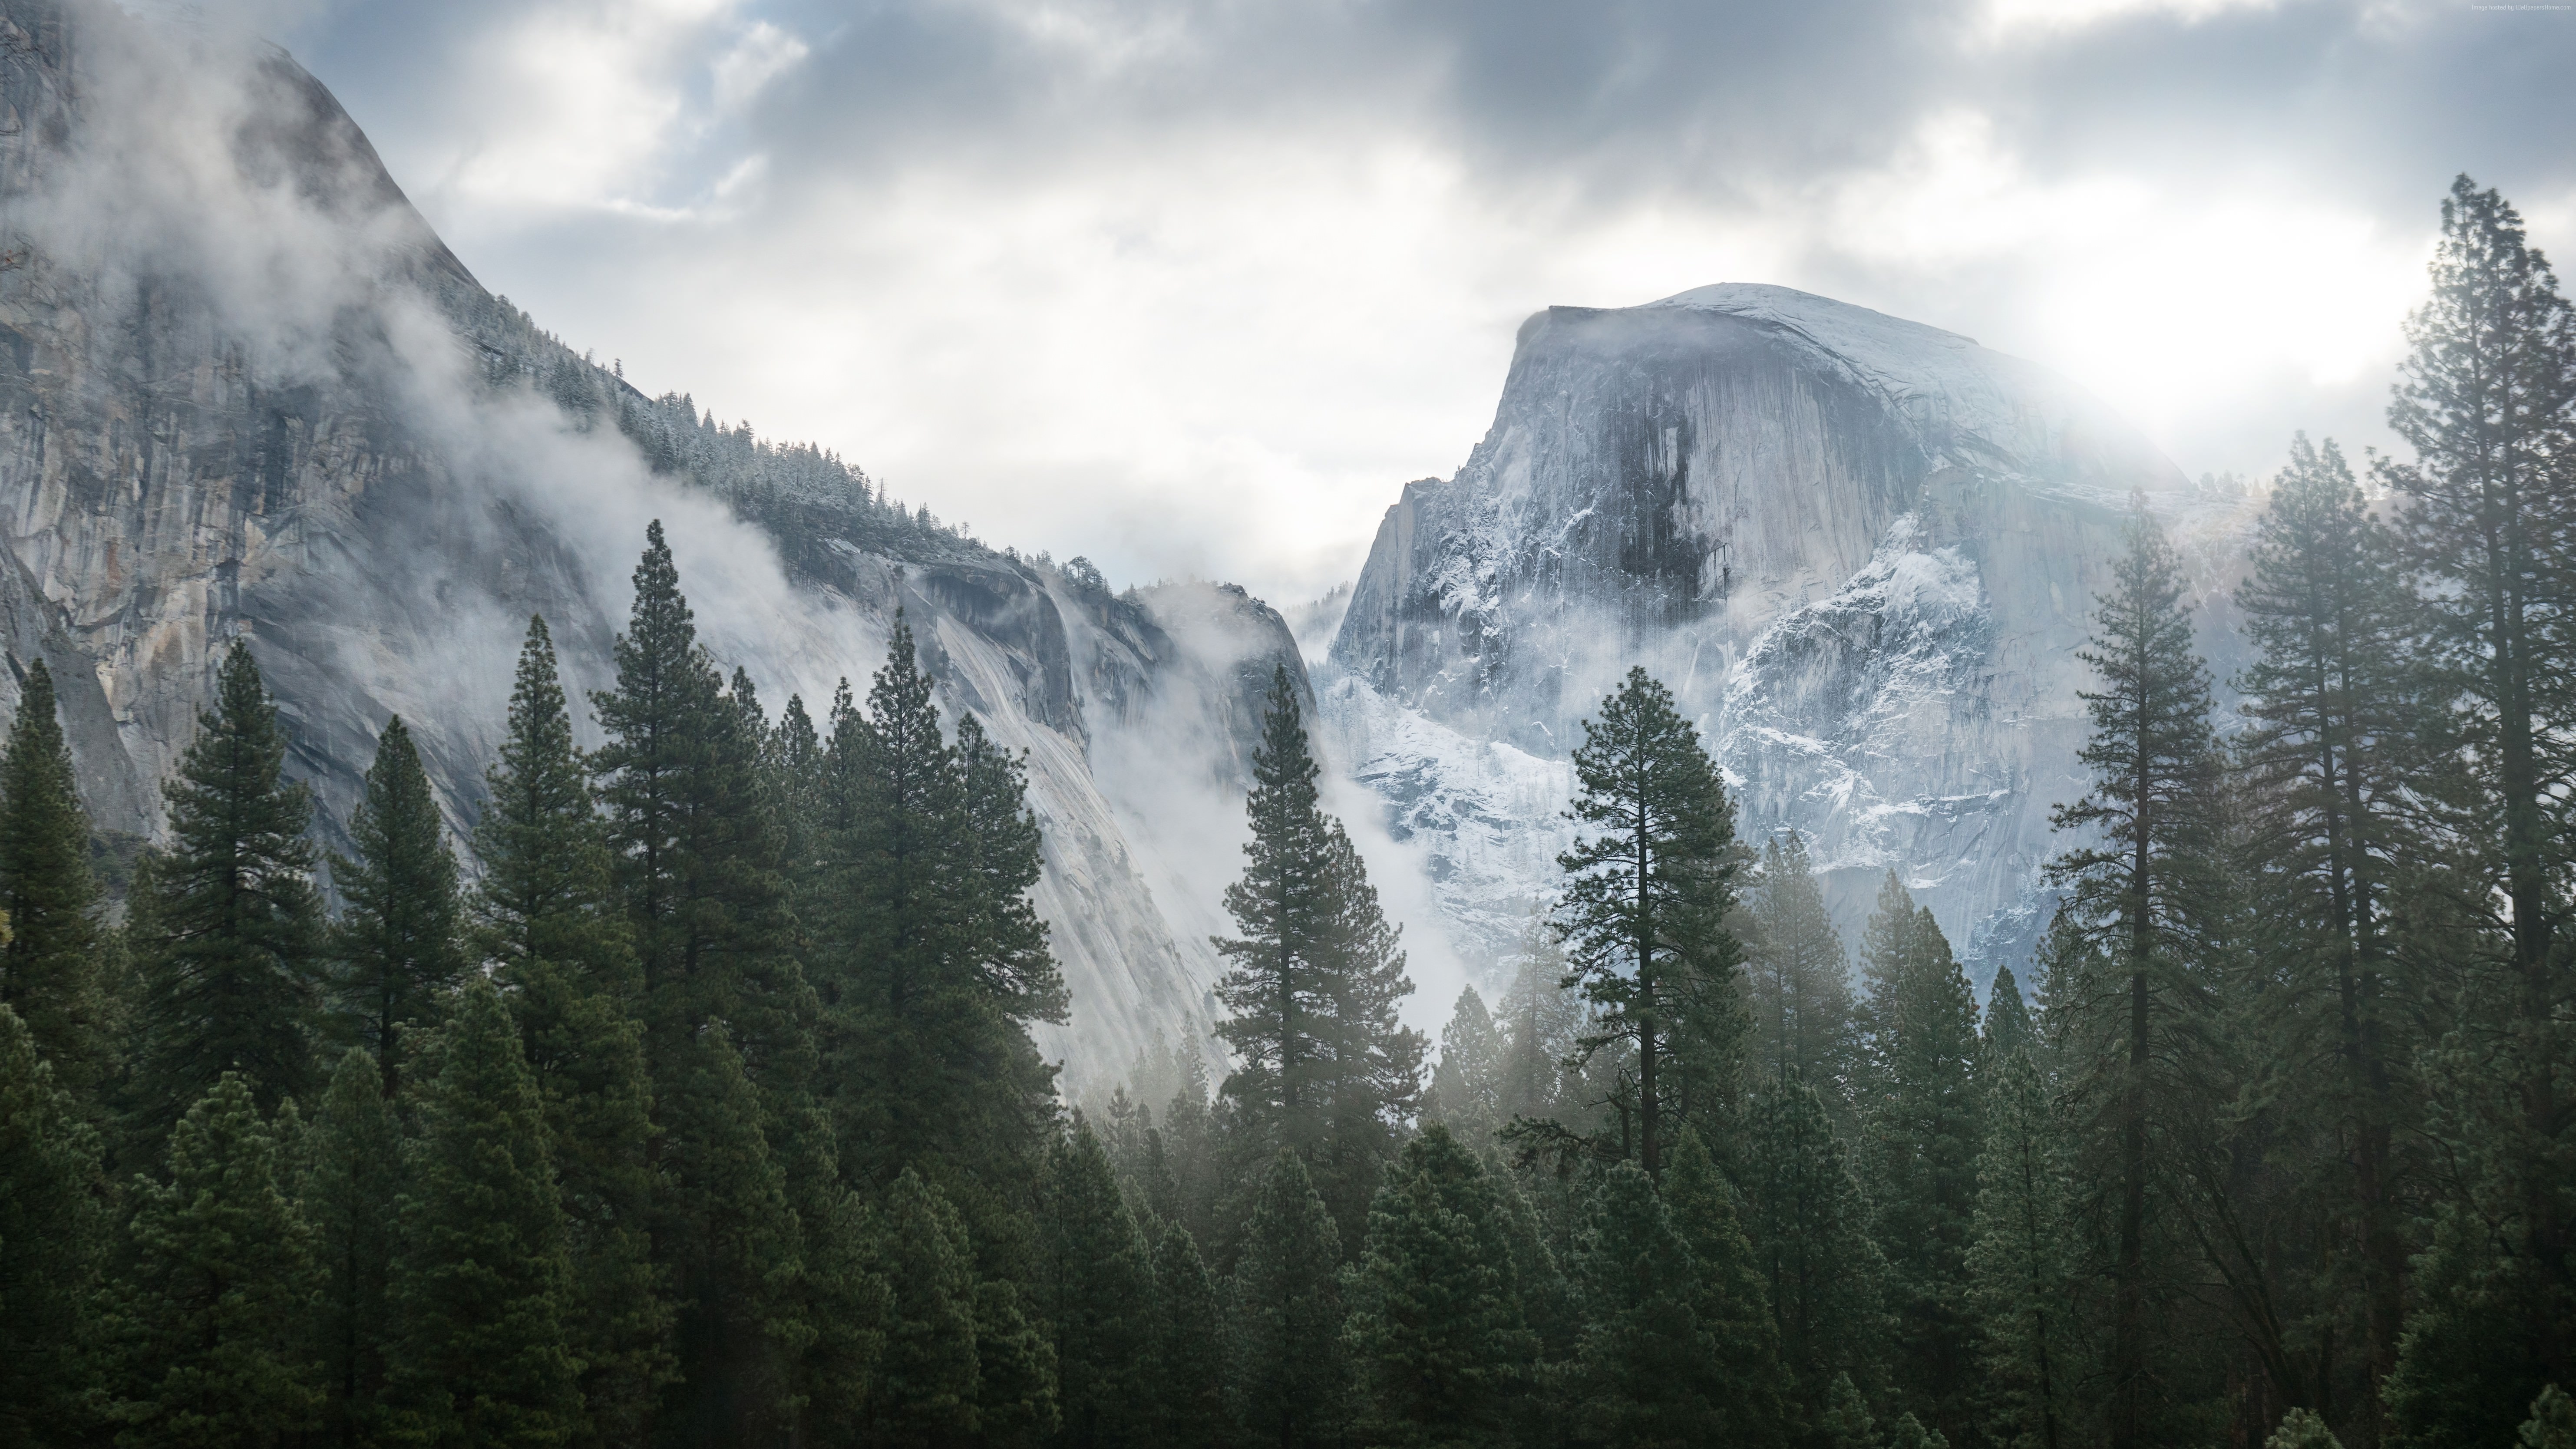 Free download Wallpaper OS Yosemite 5k wallpapers winter forest OSX apple  2560x1707 for your Desktop Mobile  Tablet  Explore 46 5K Apple  Wallpapers  5K Image HD Wallpaper Apple Apple 5K